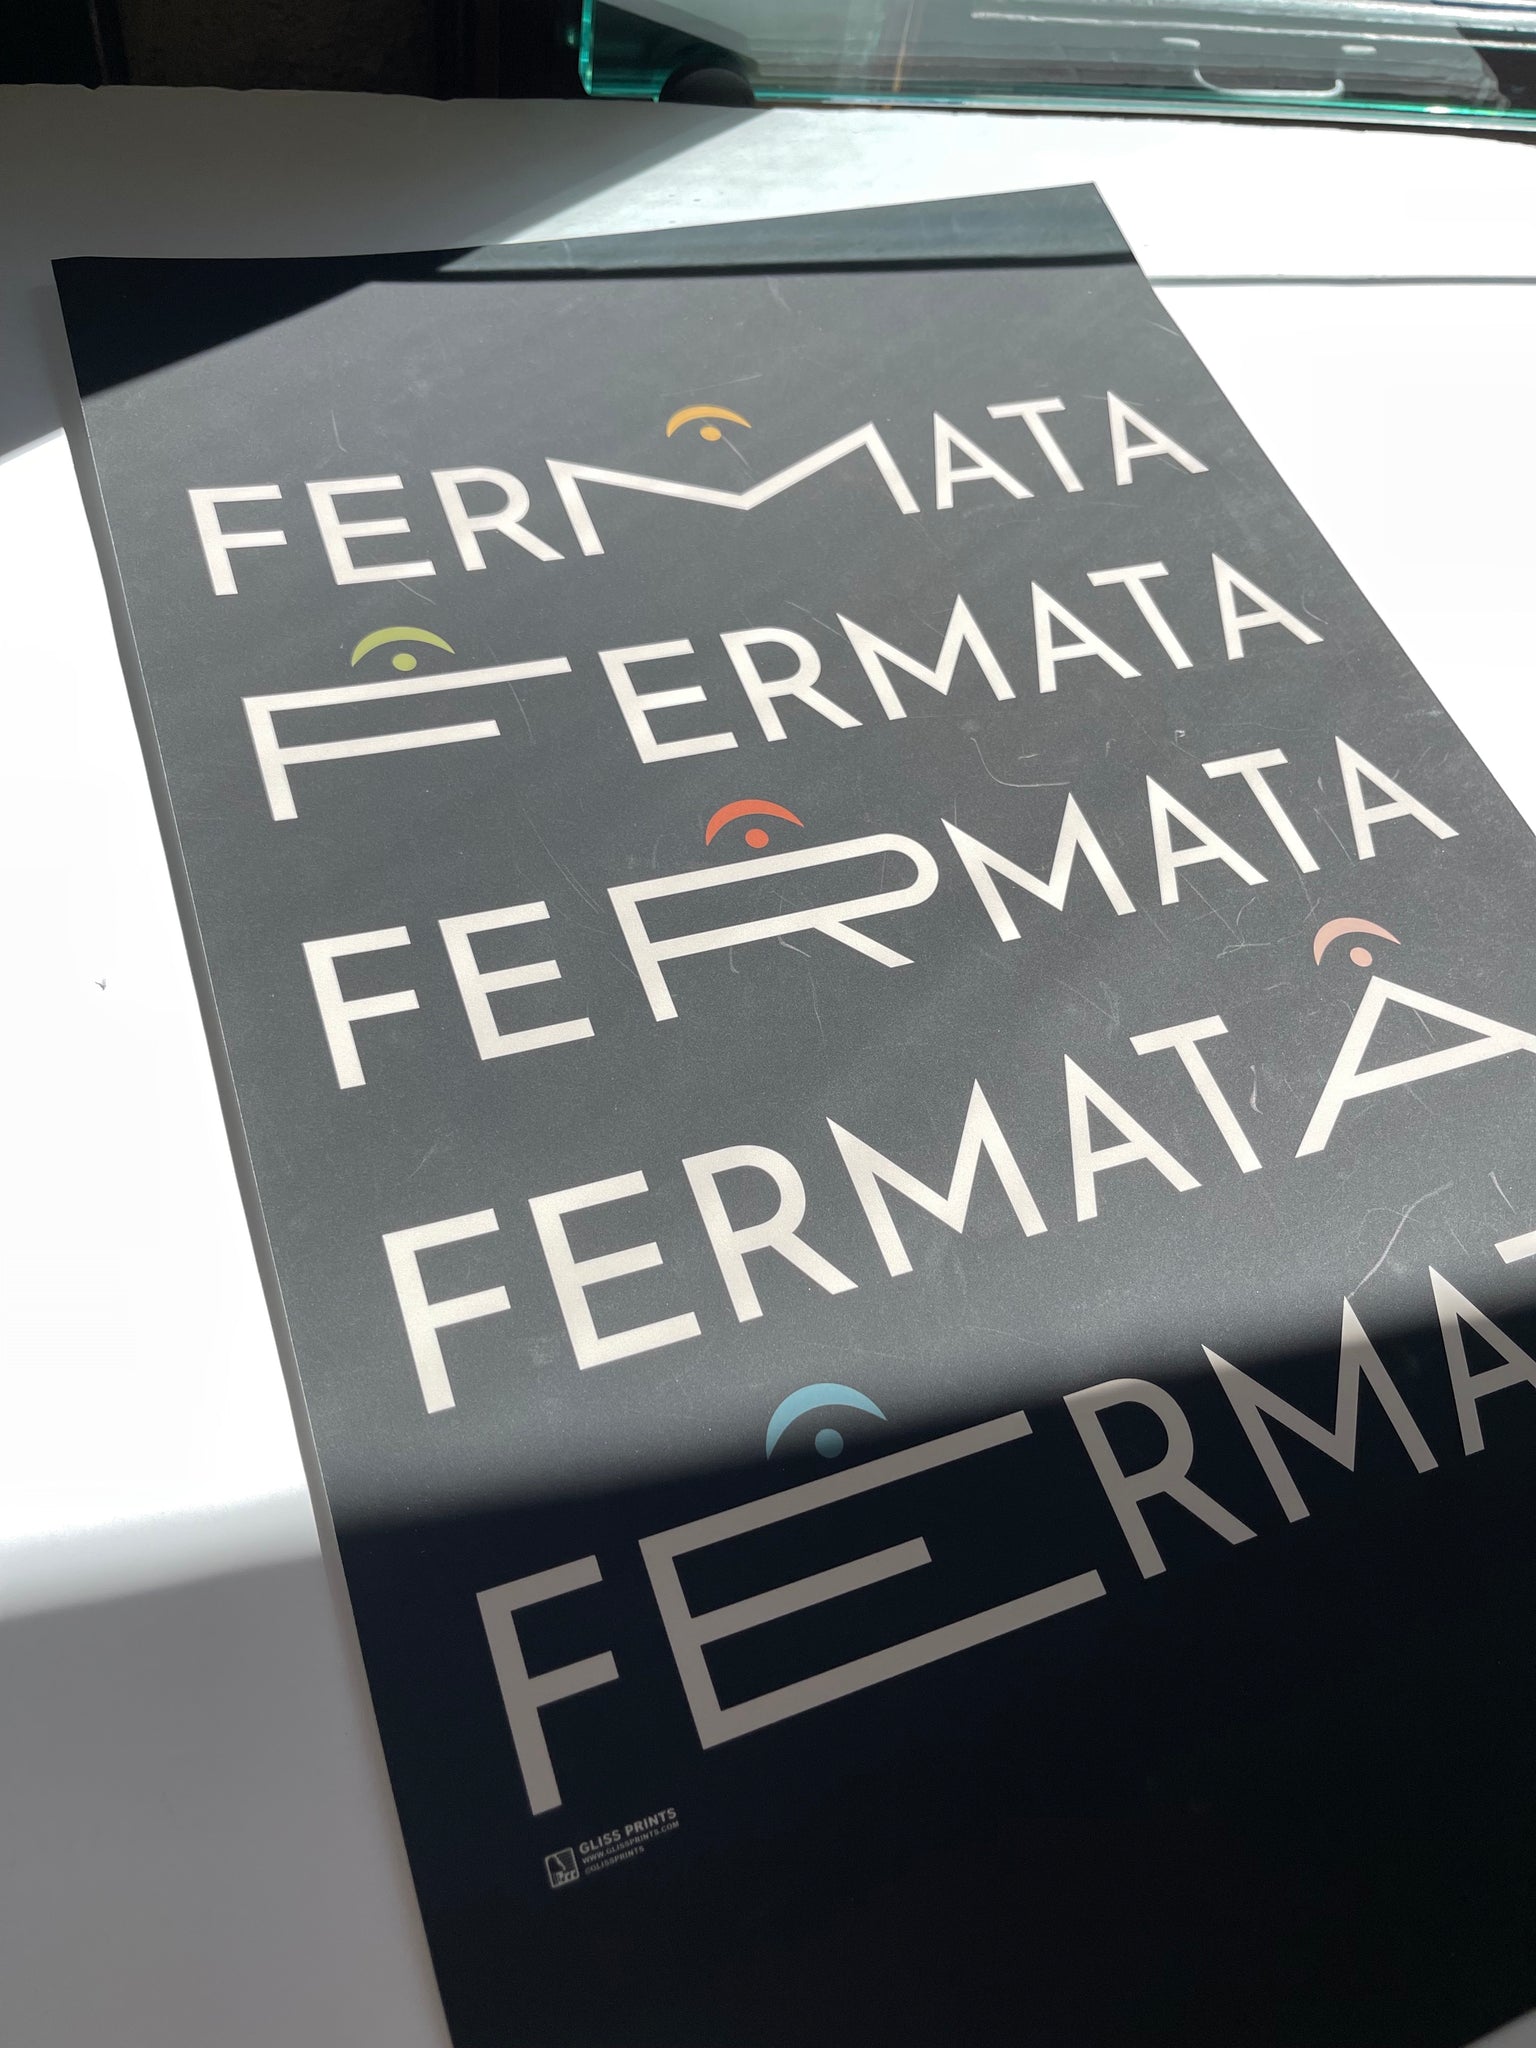 Fermata Typography Print, Black